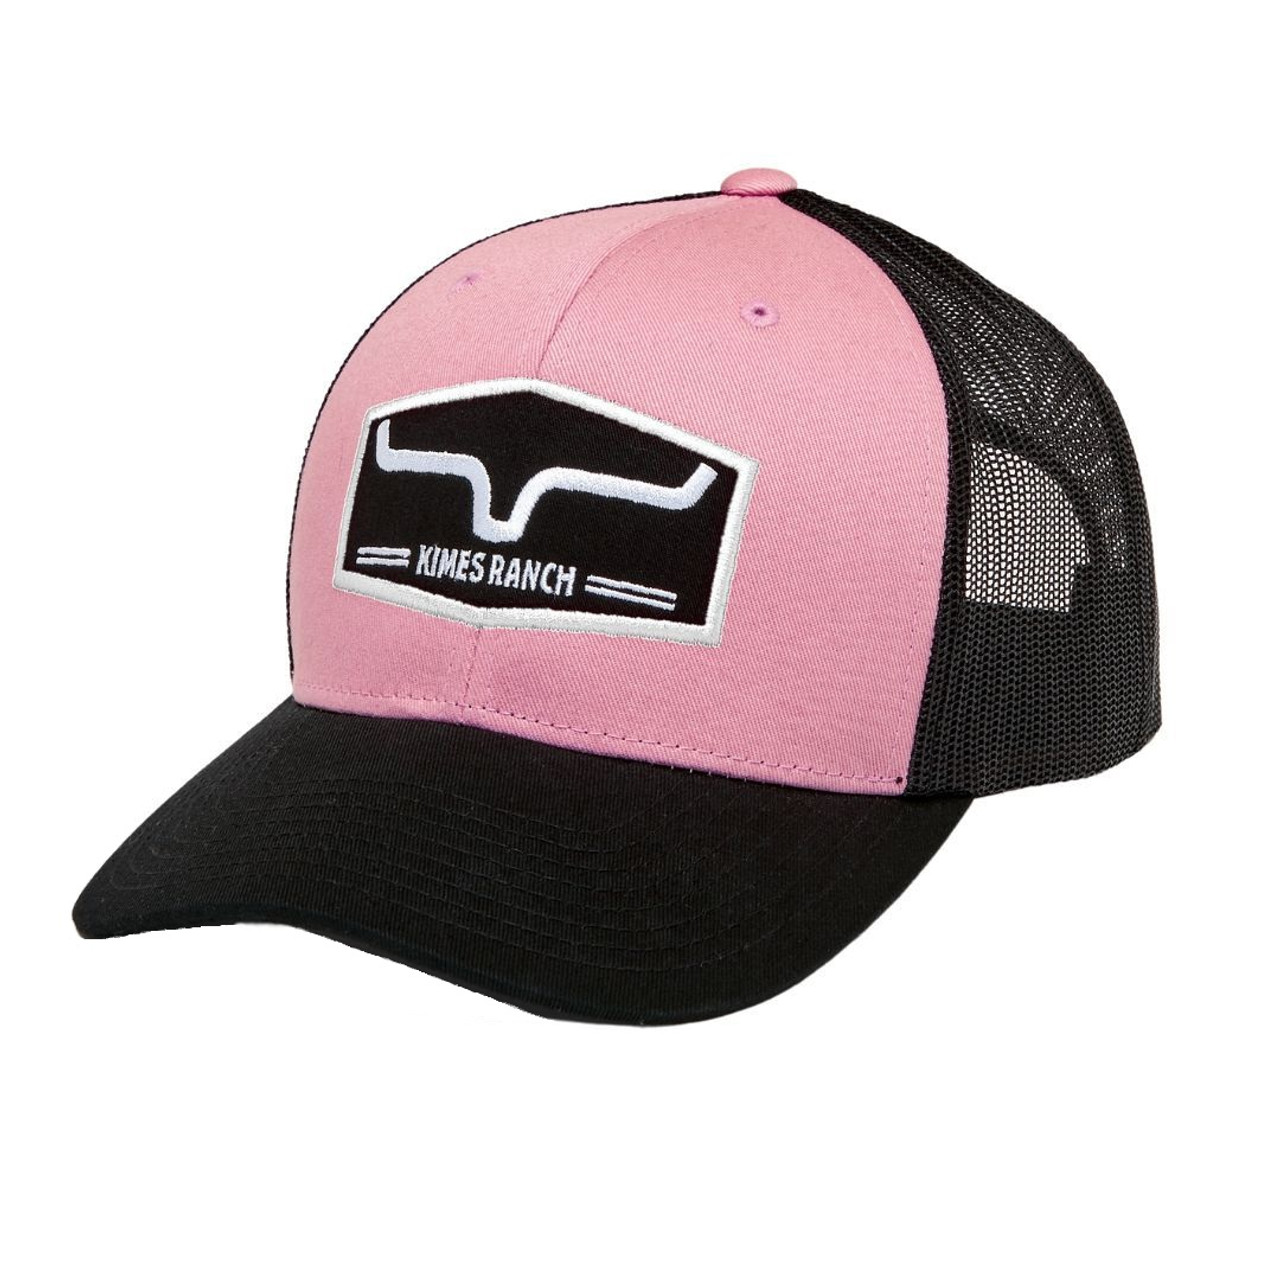 Kimes Ranch Replay Trucker Cap- Casual Western Hats